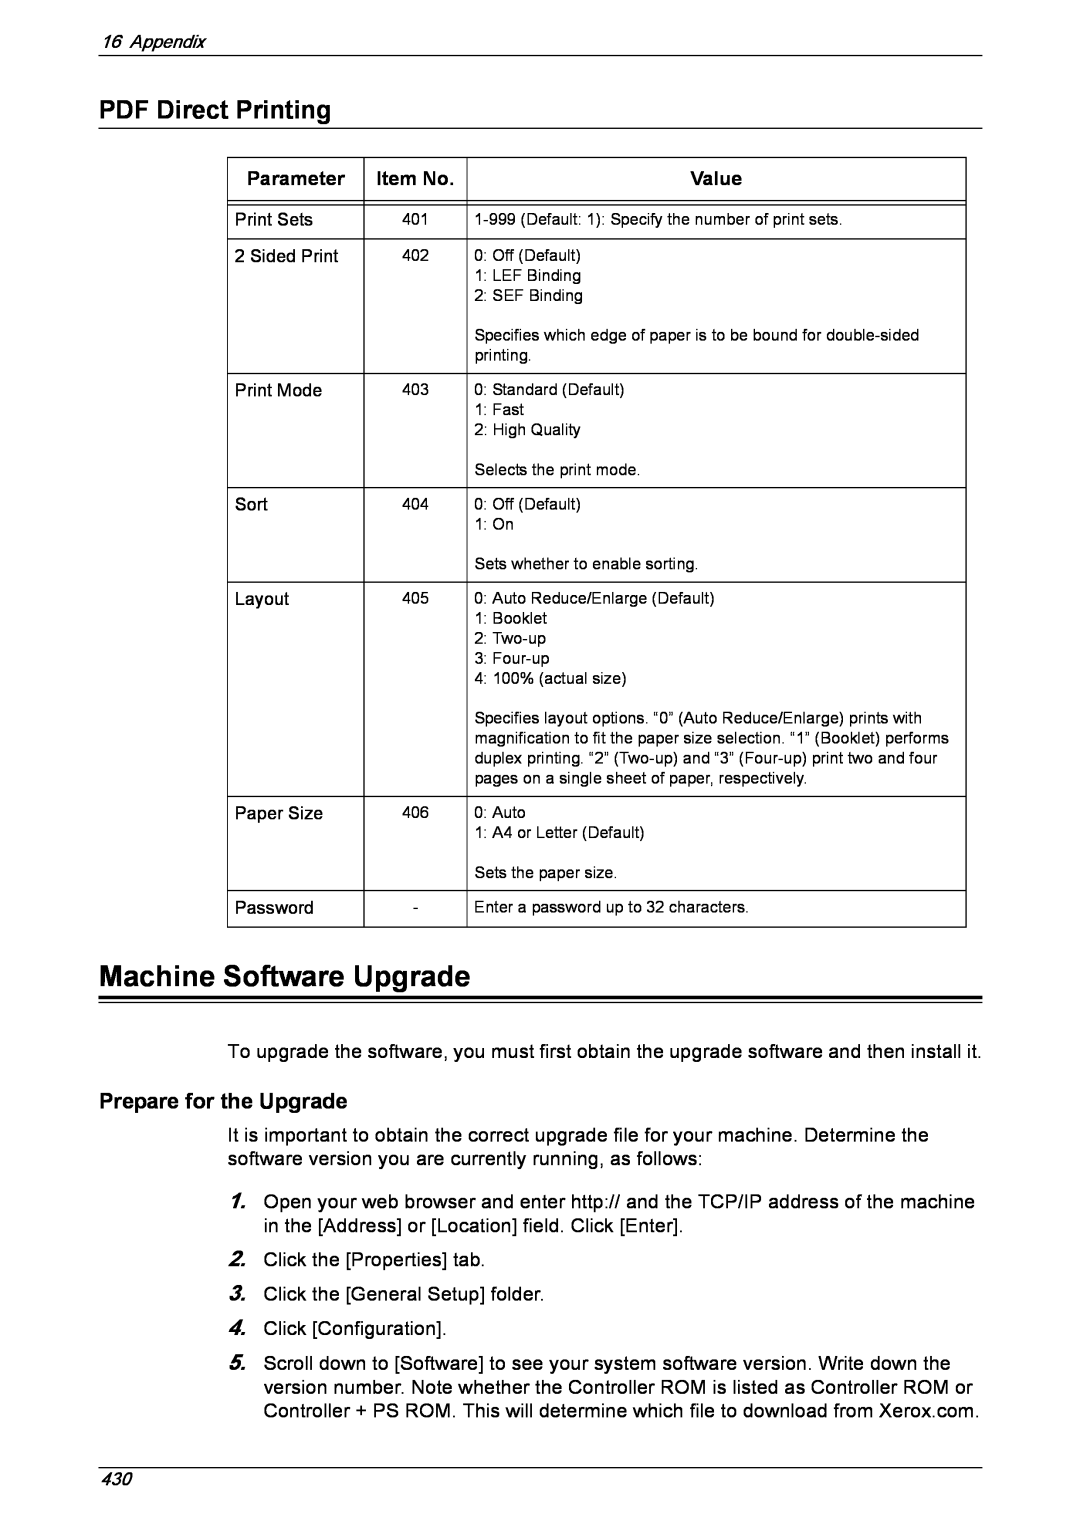 Xerox 5222 manual Machine Software Upgrade, PDF Direct Printing, Parameter, Item No, Value 